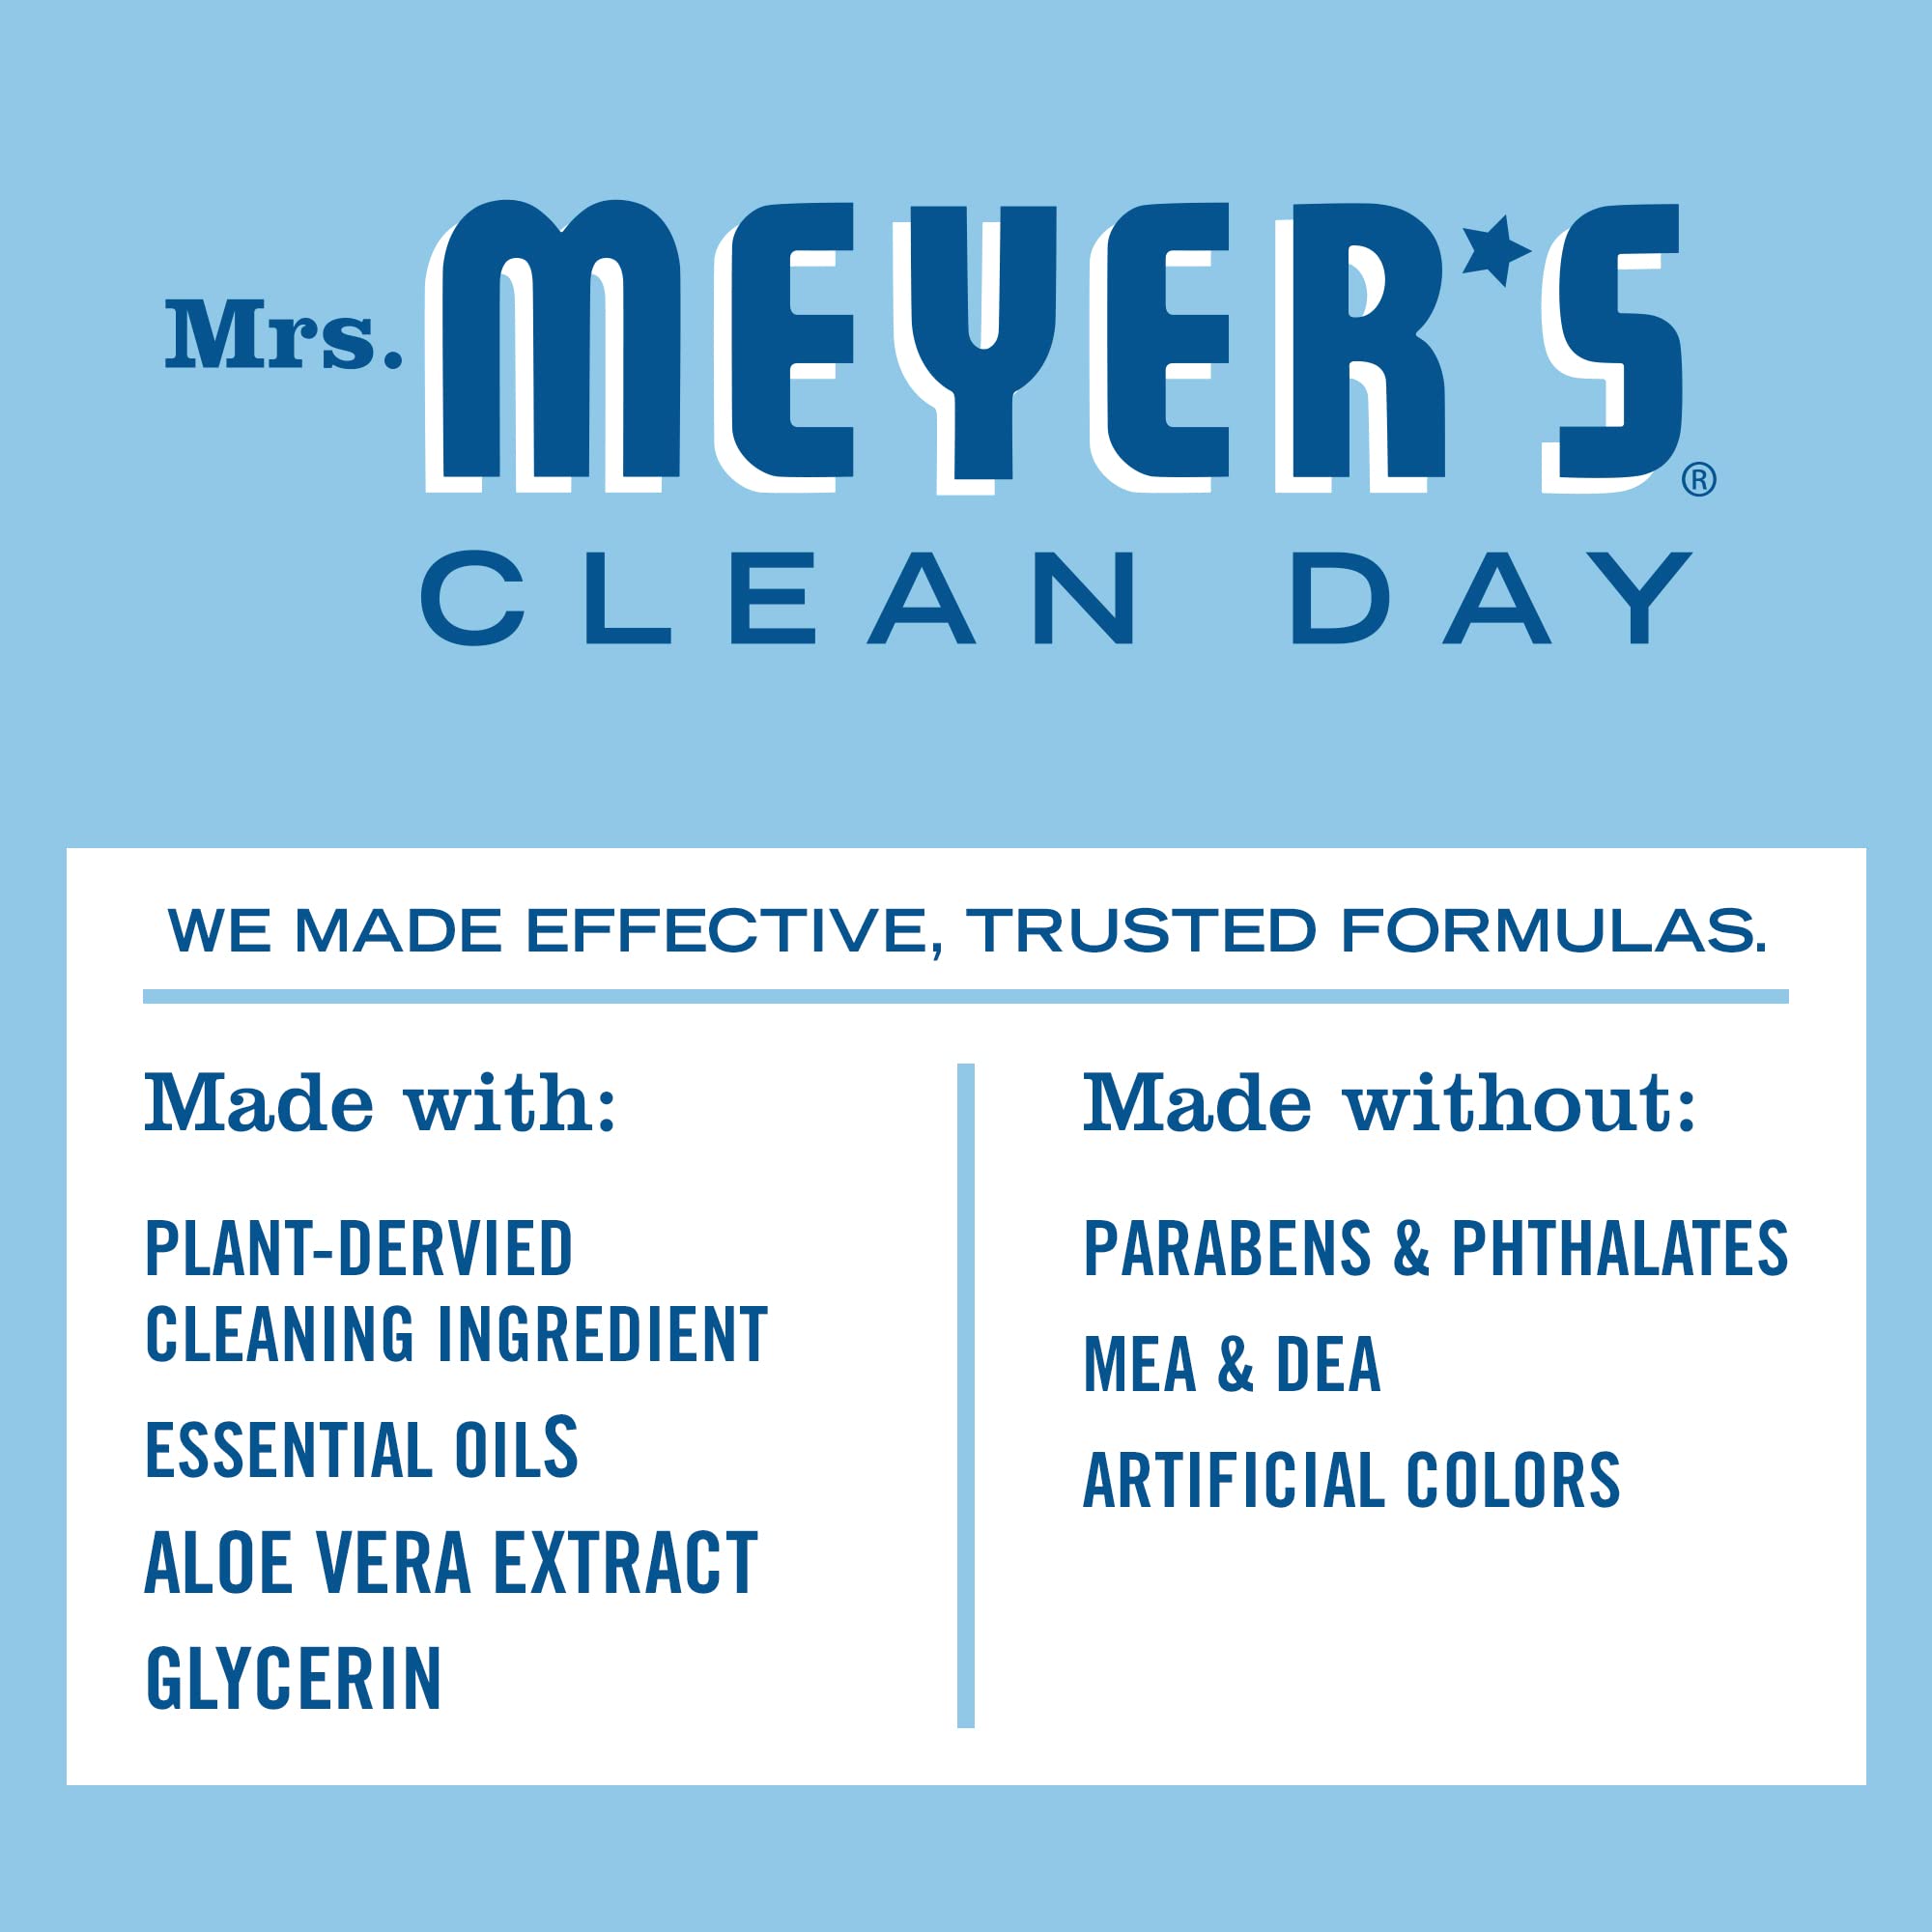 MRS. MEYER'S CLEAN DAY Liquid Dish Soap, Biodegradable Formula, Rain Water, 16 fl. oz